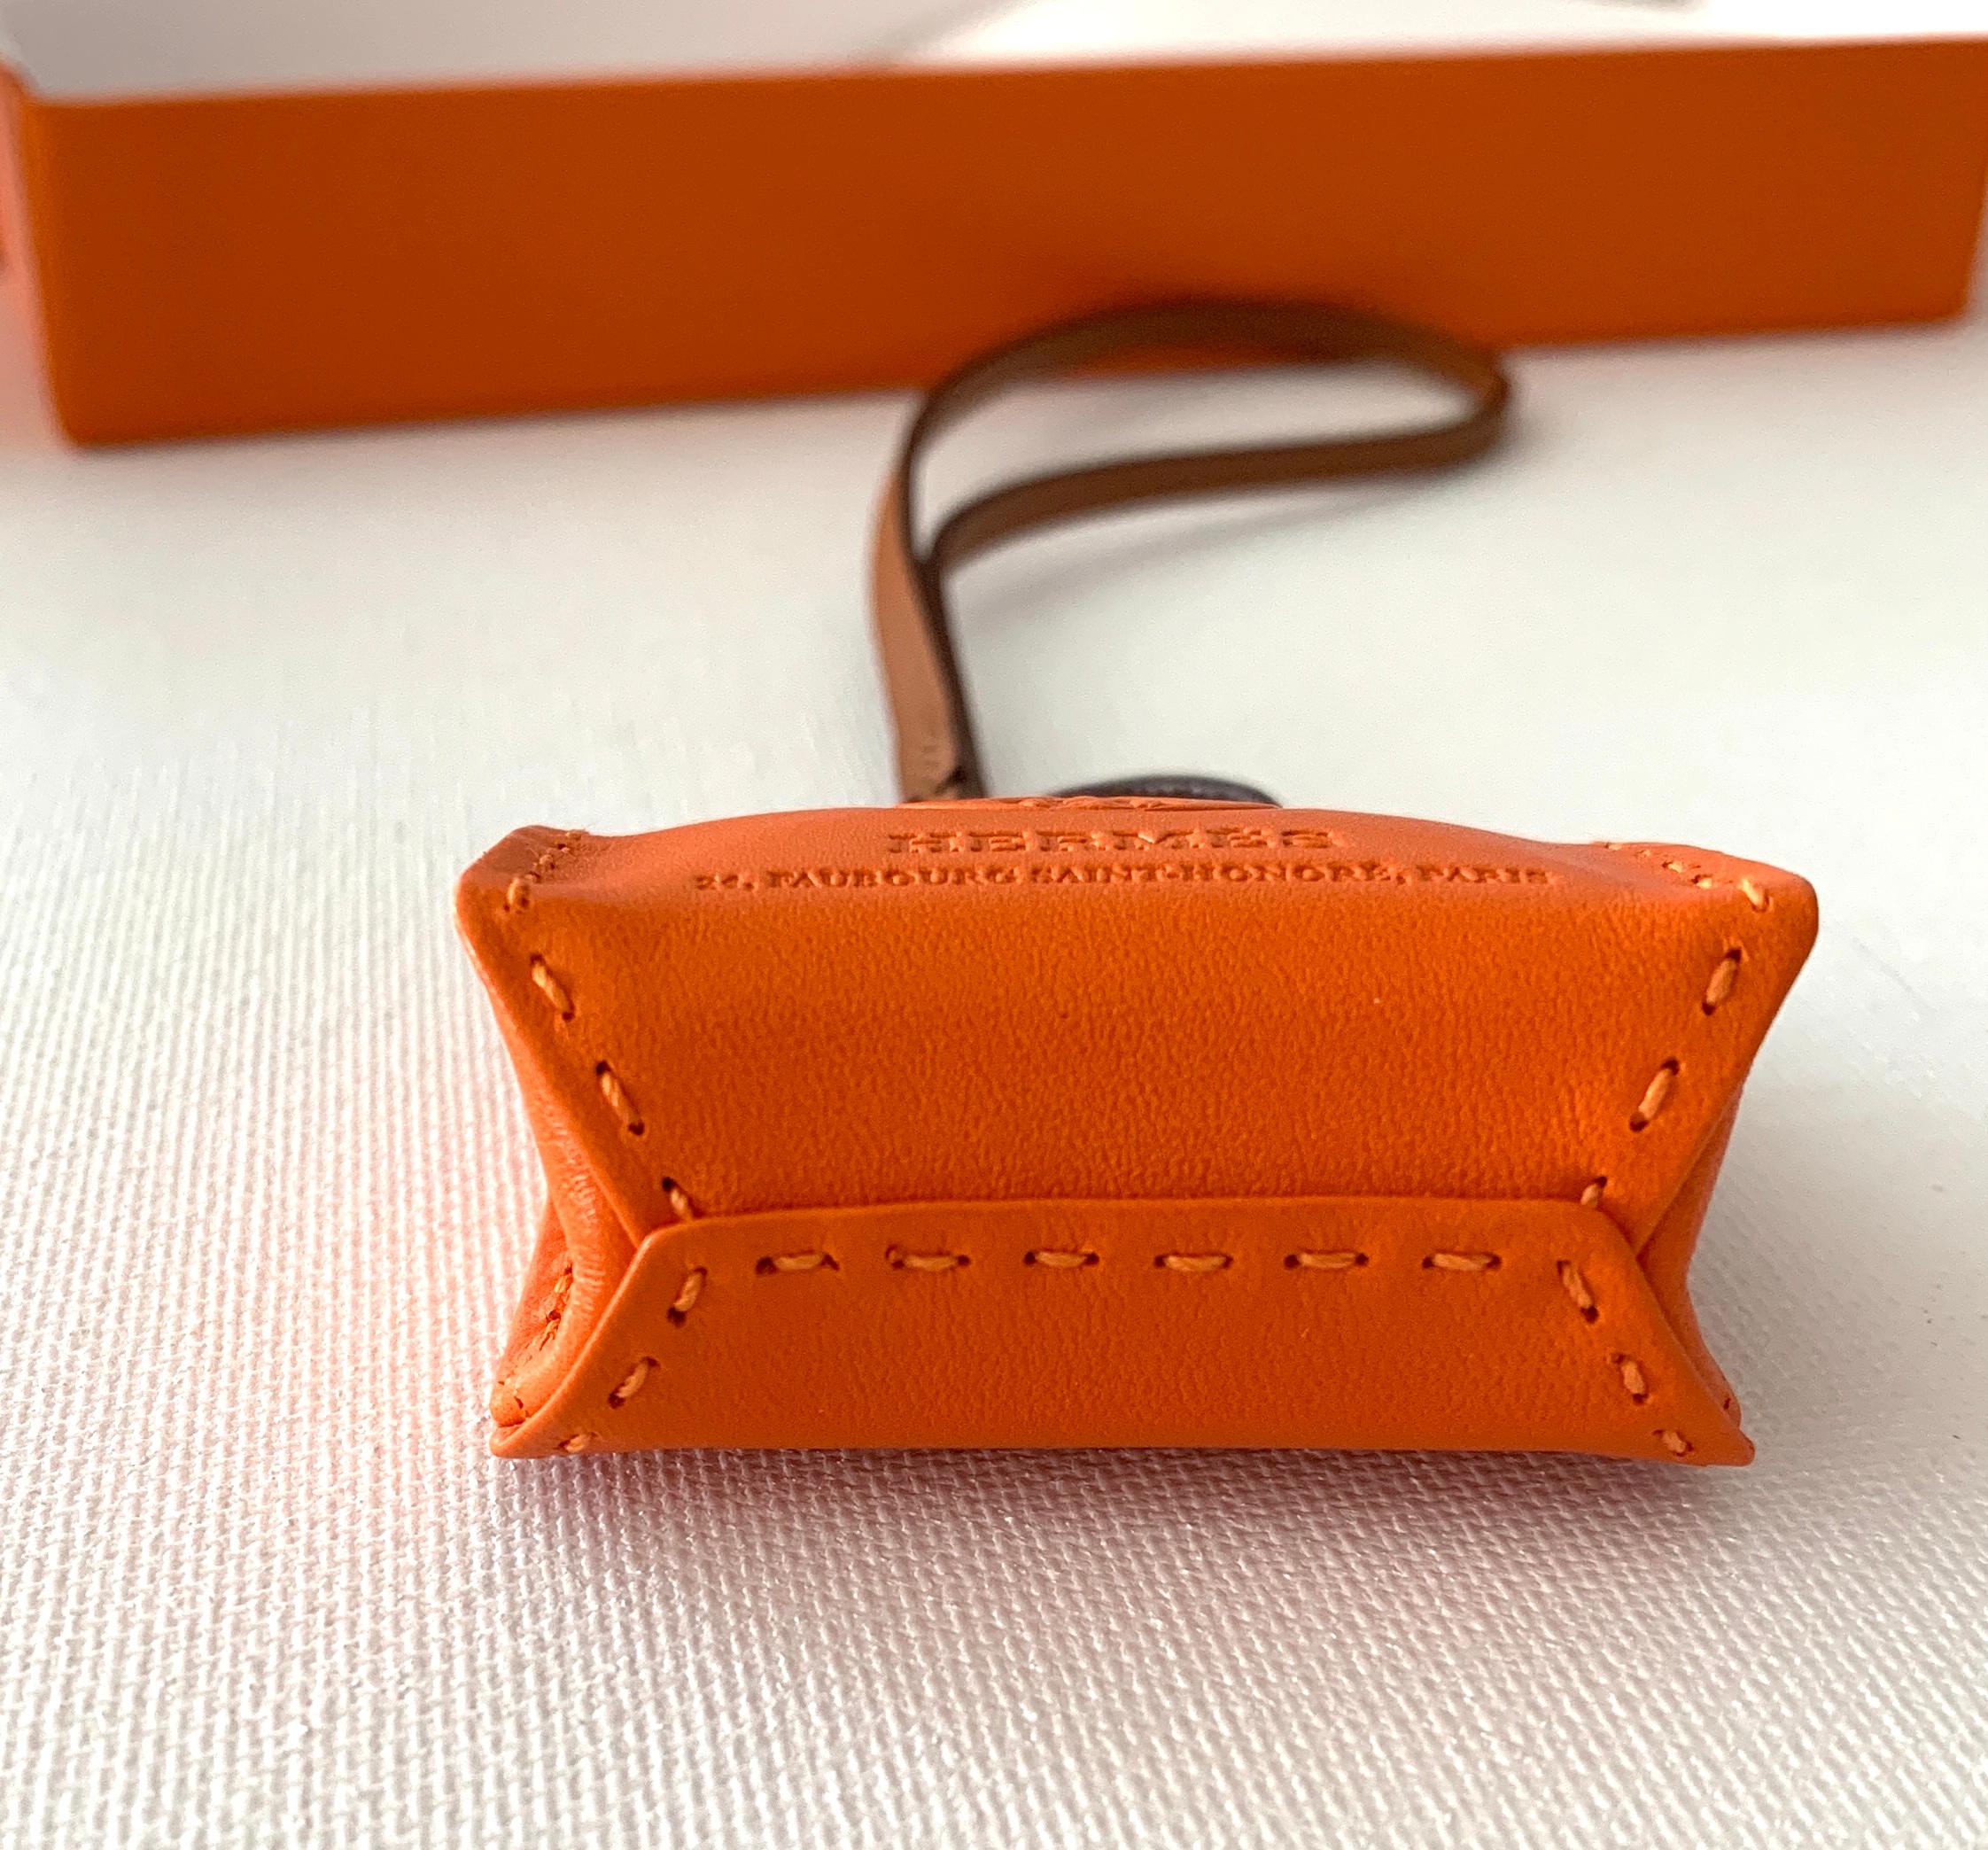 Hermes Shopping Bag Orange Leather Charm for Birkin For Sale 1